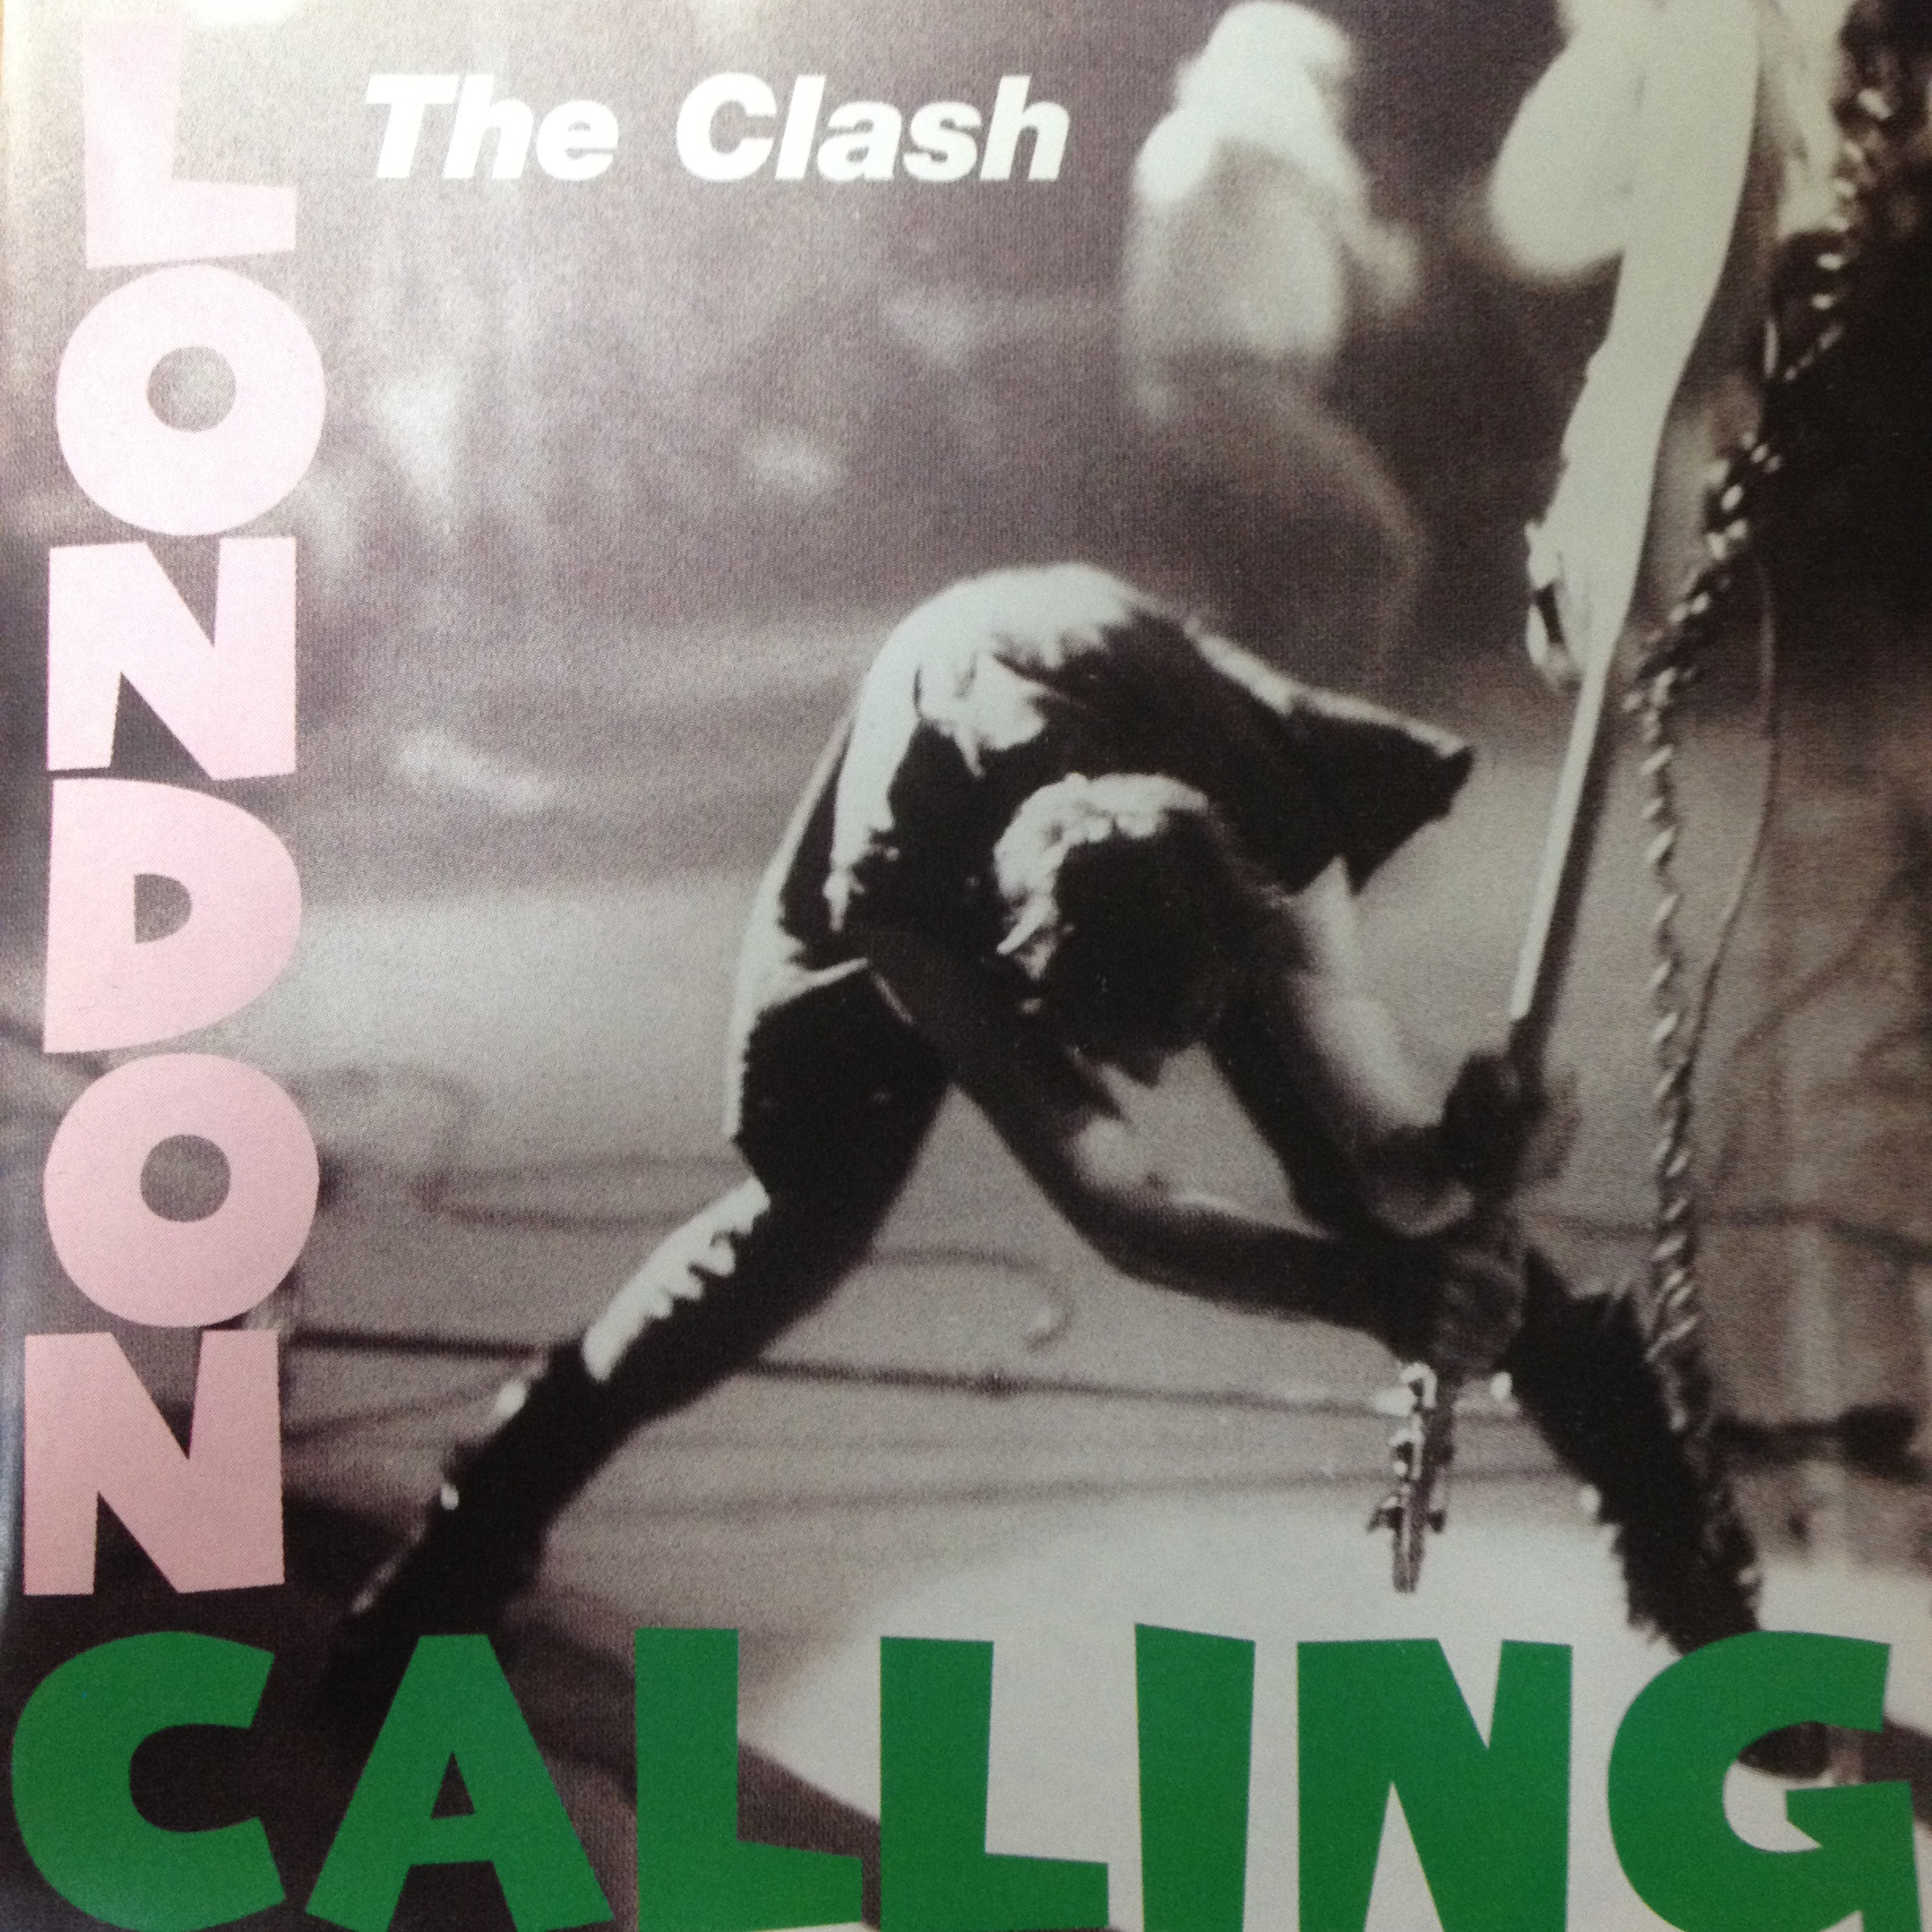 The Clash 「LOST IN SUPERMARKET」